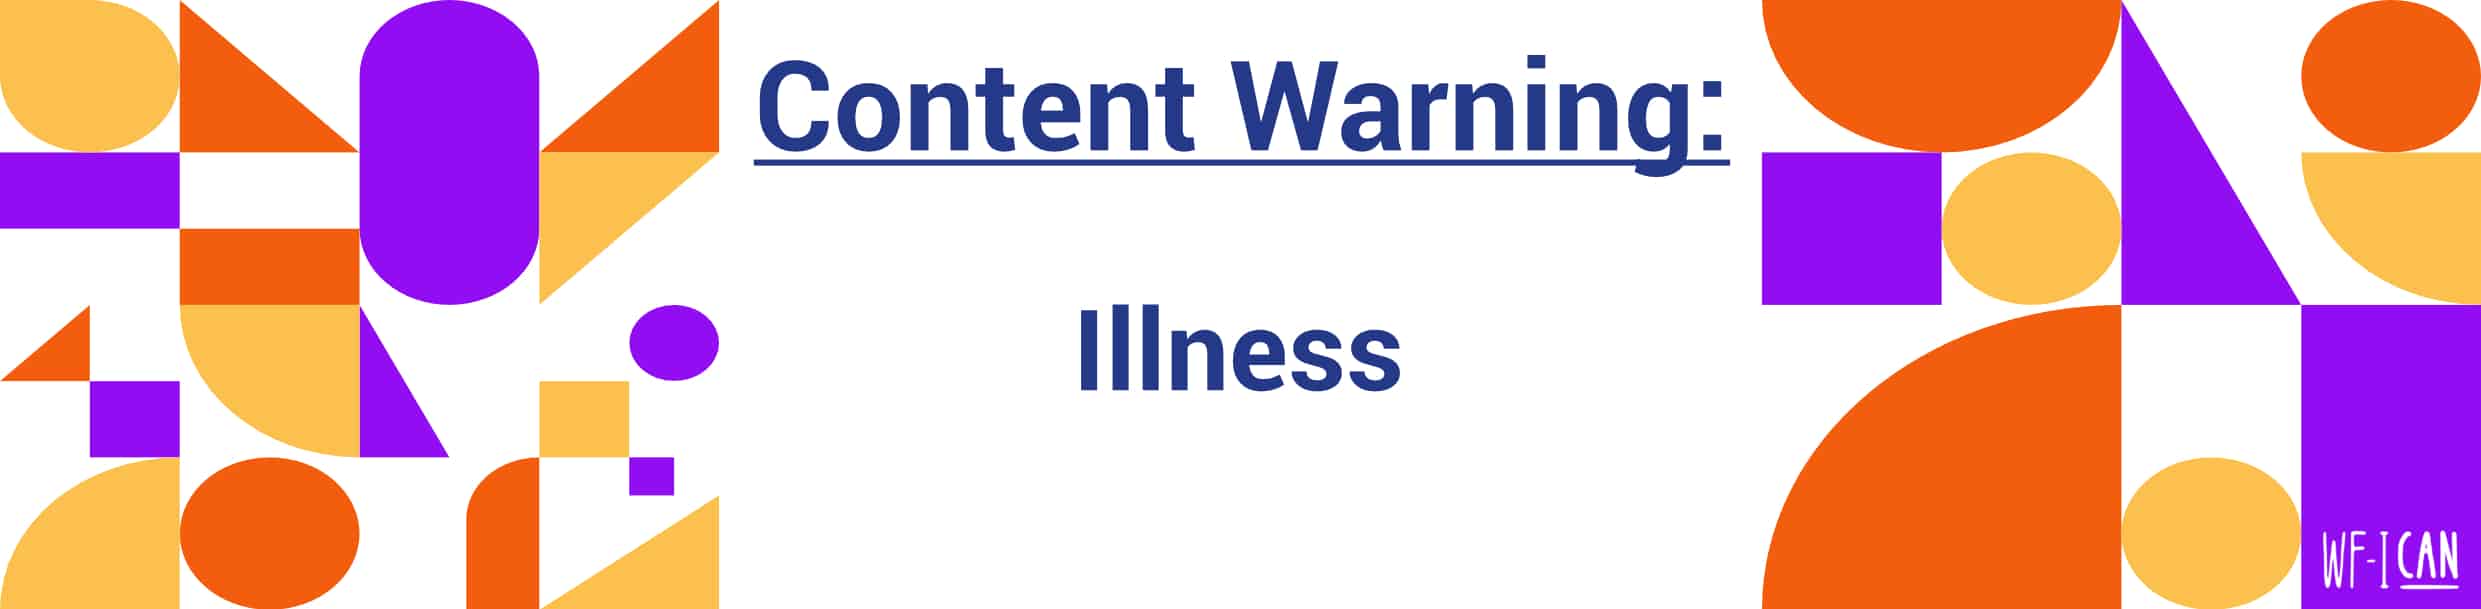 content warning illness